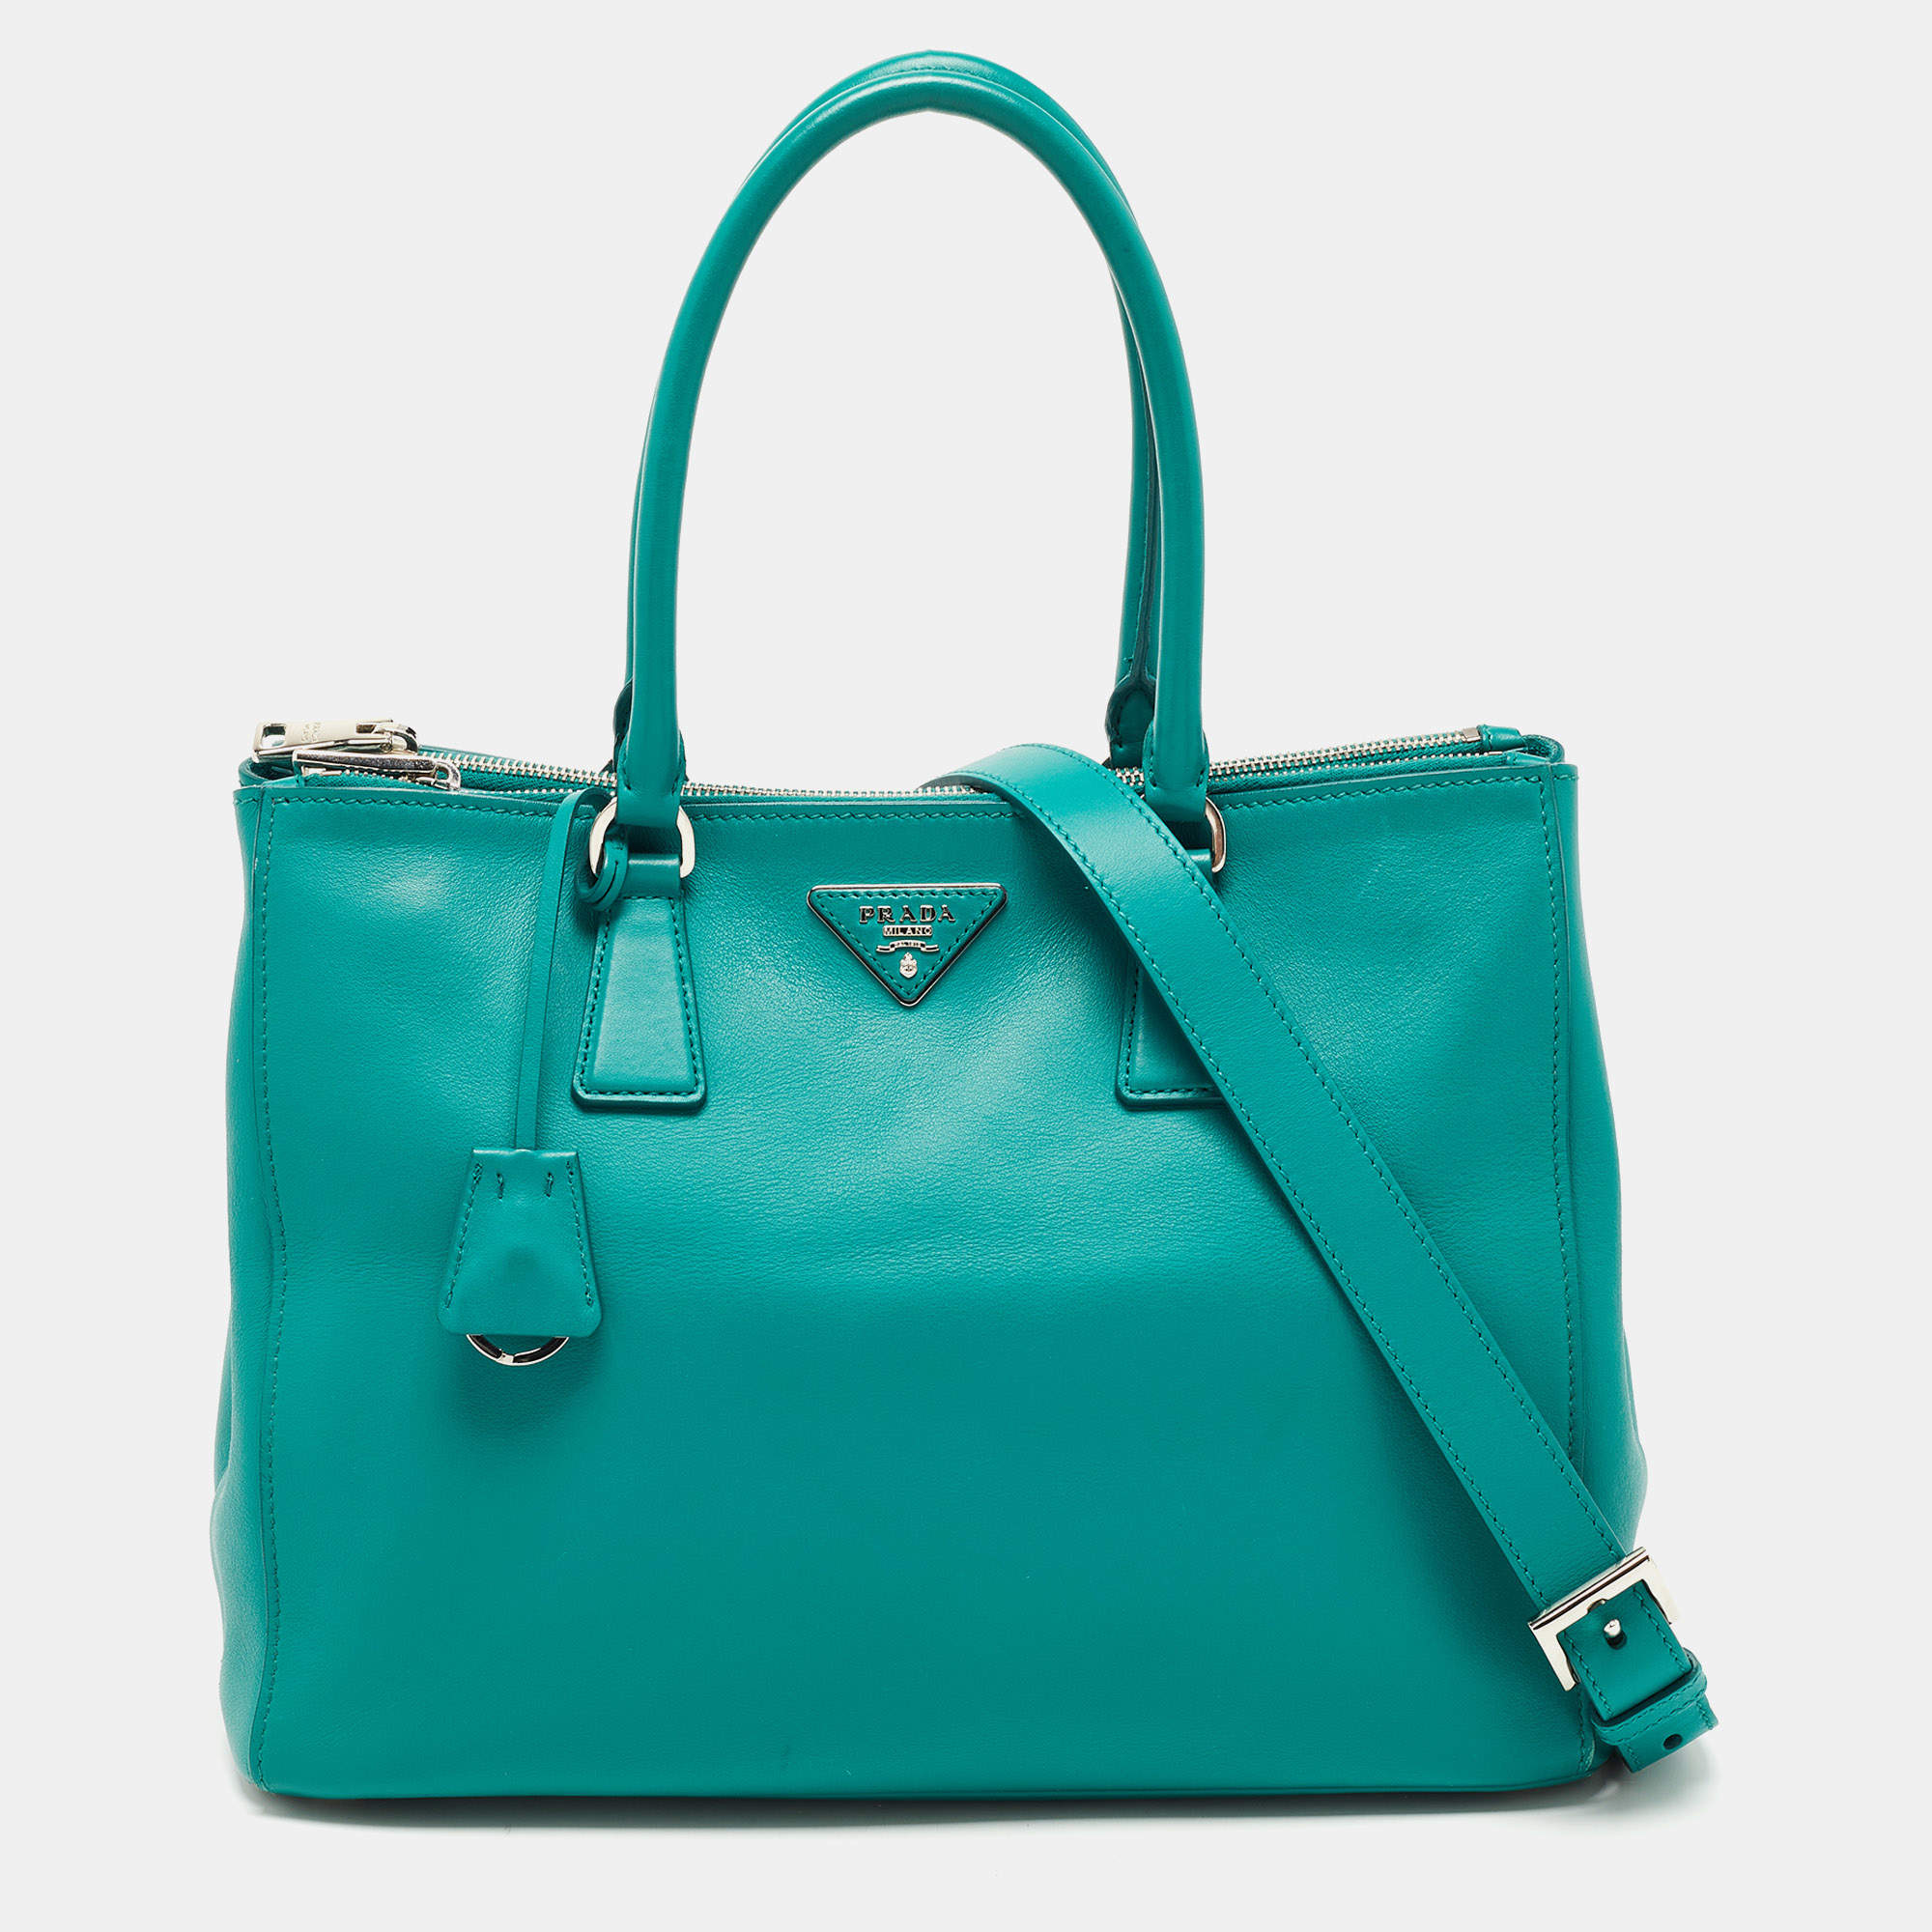 Prada Galleria small leather bag for Women - Green in KSA